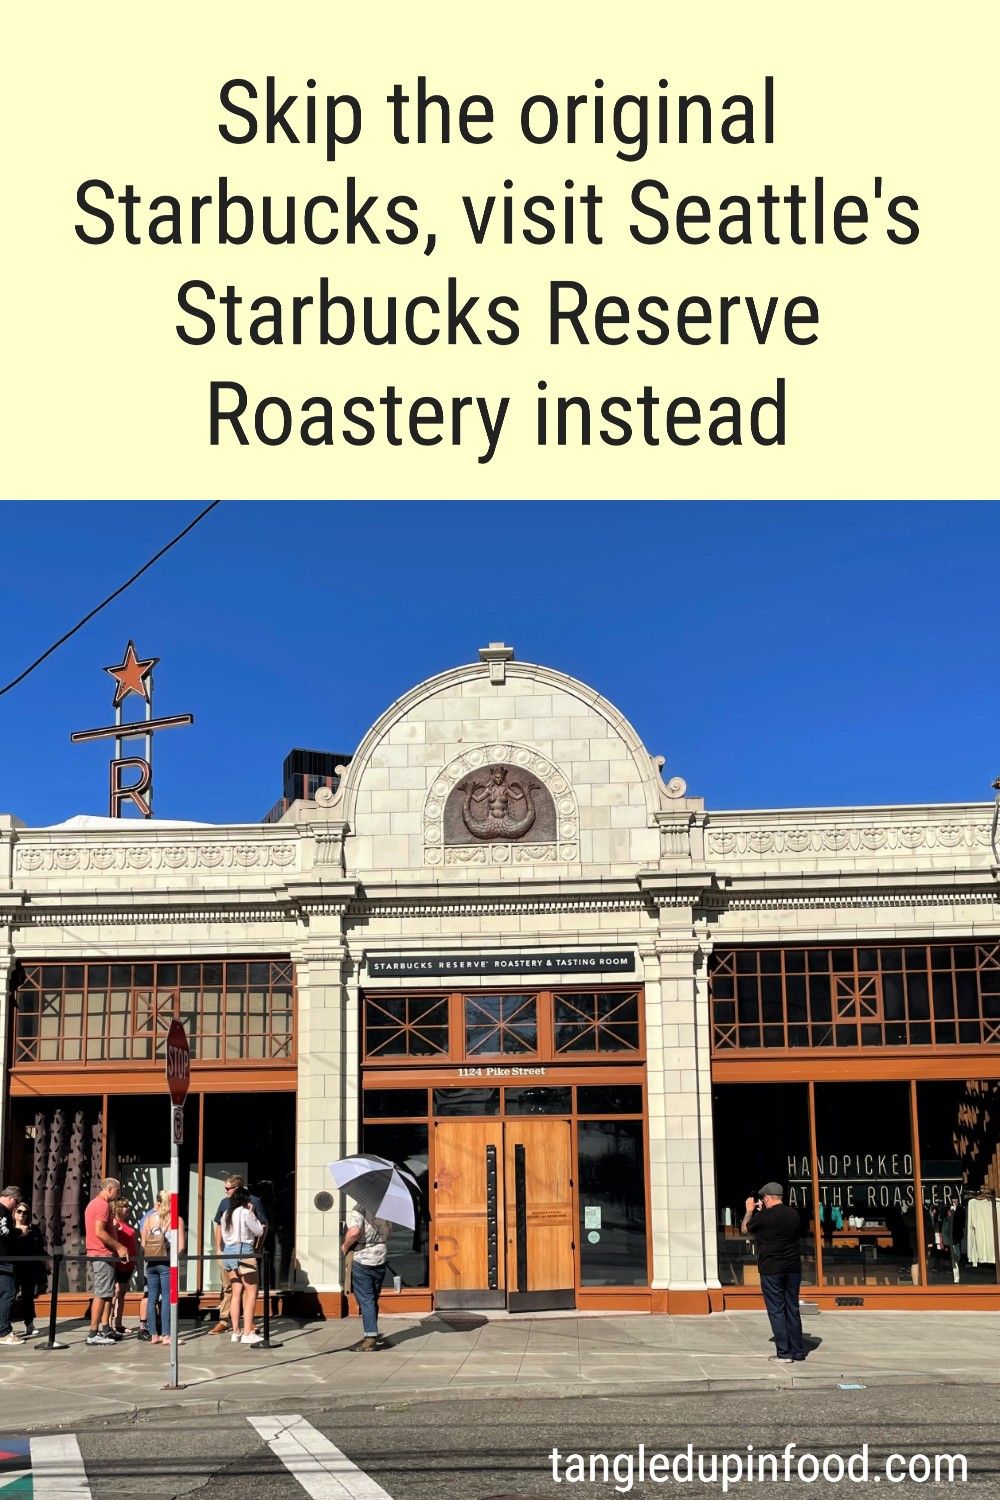 Elegant white building with text reading "Skip the original Starbucks, visit Seattle's Starbucks Reserve Roastery instead"